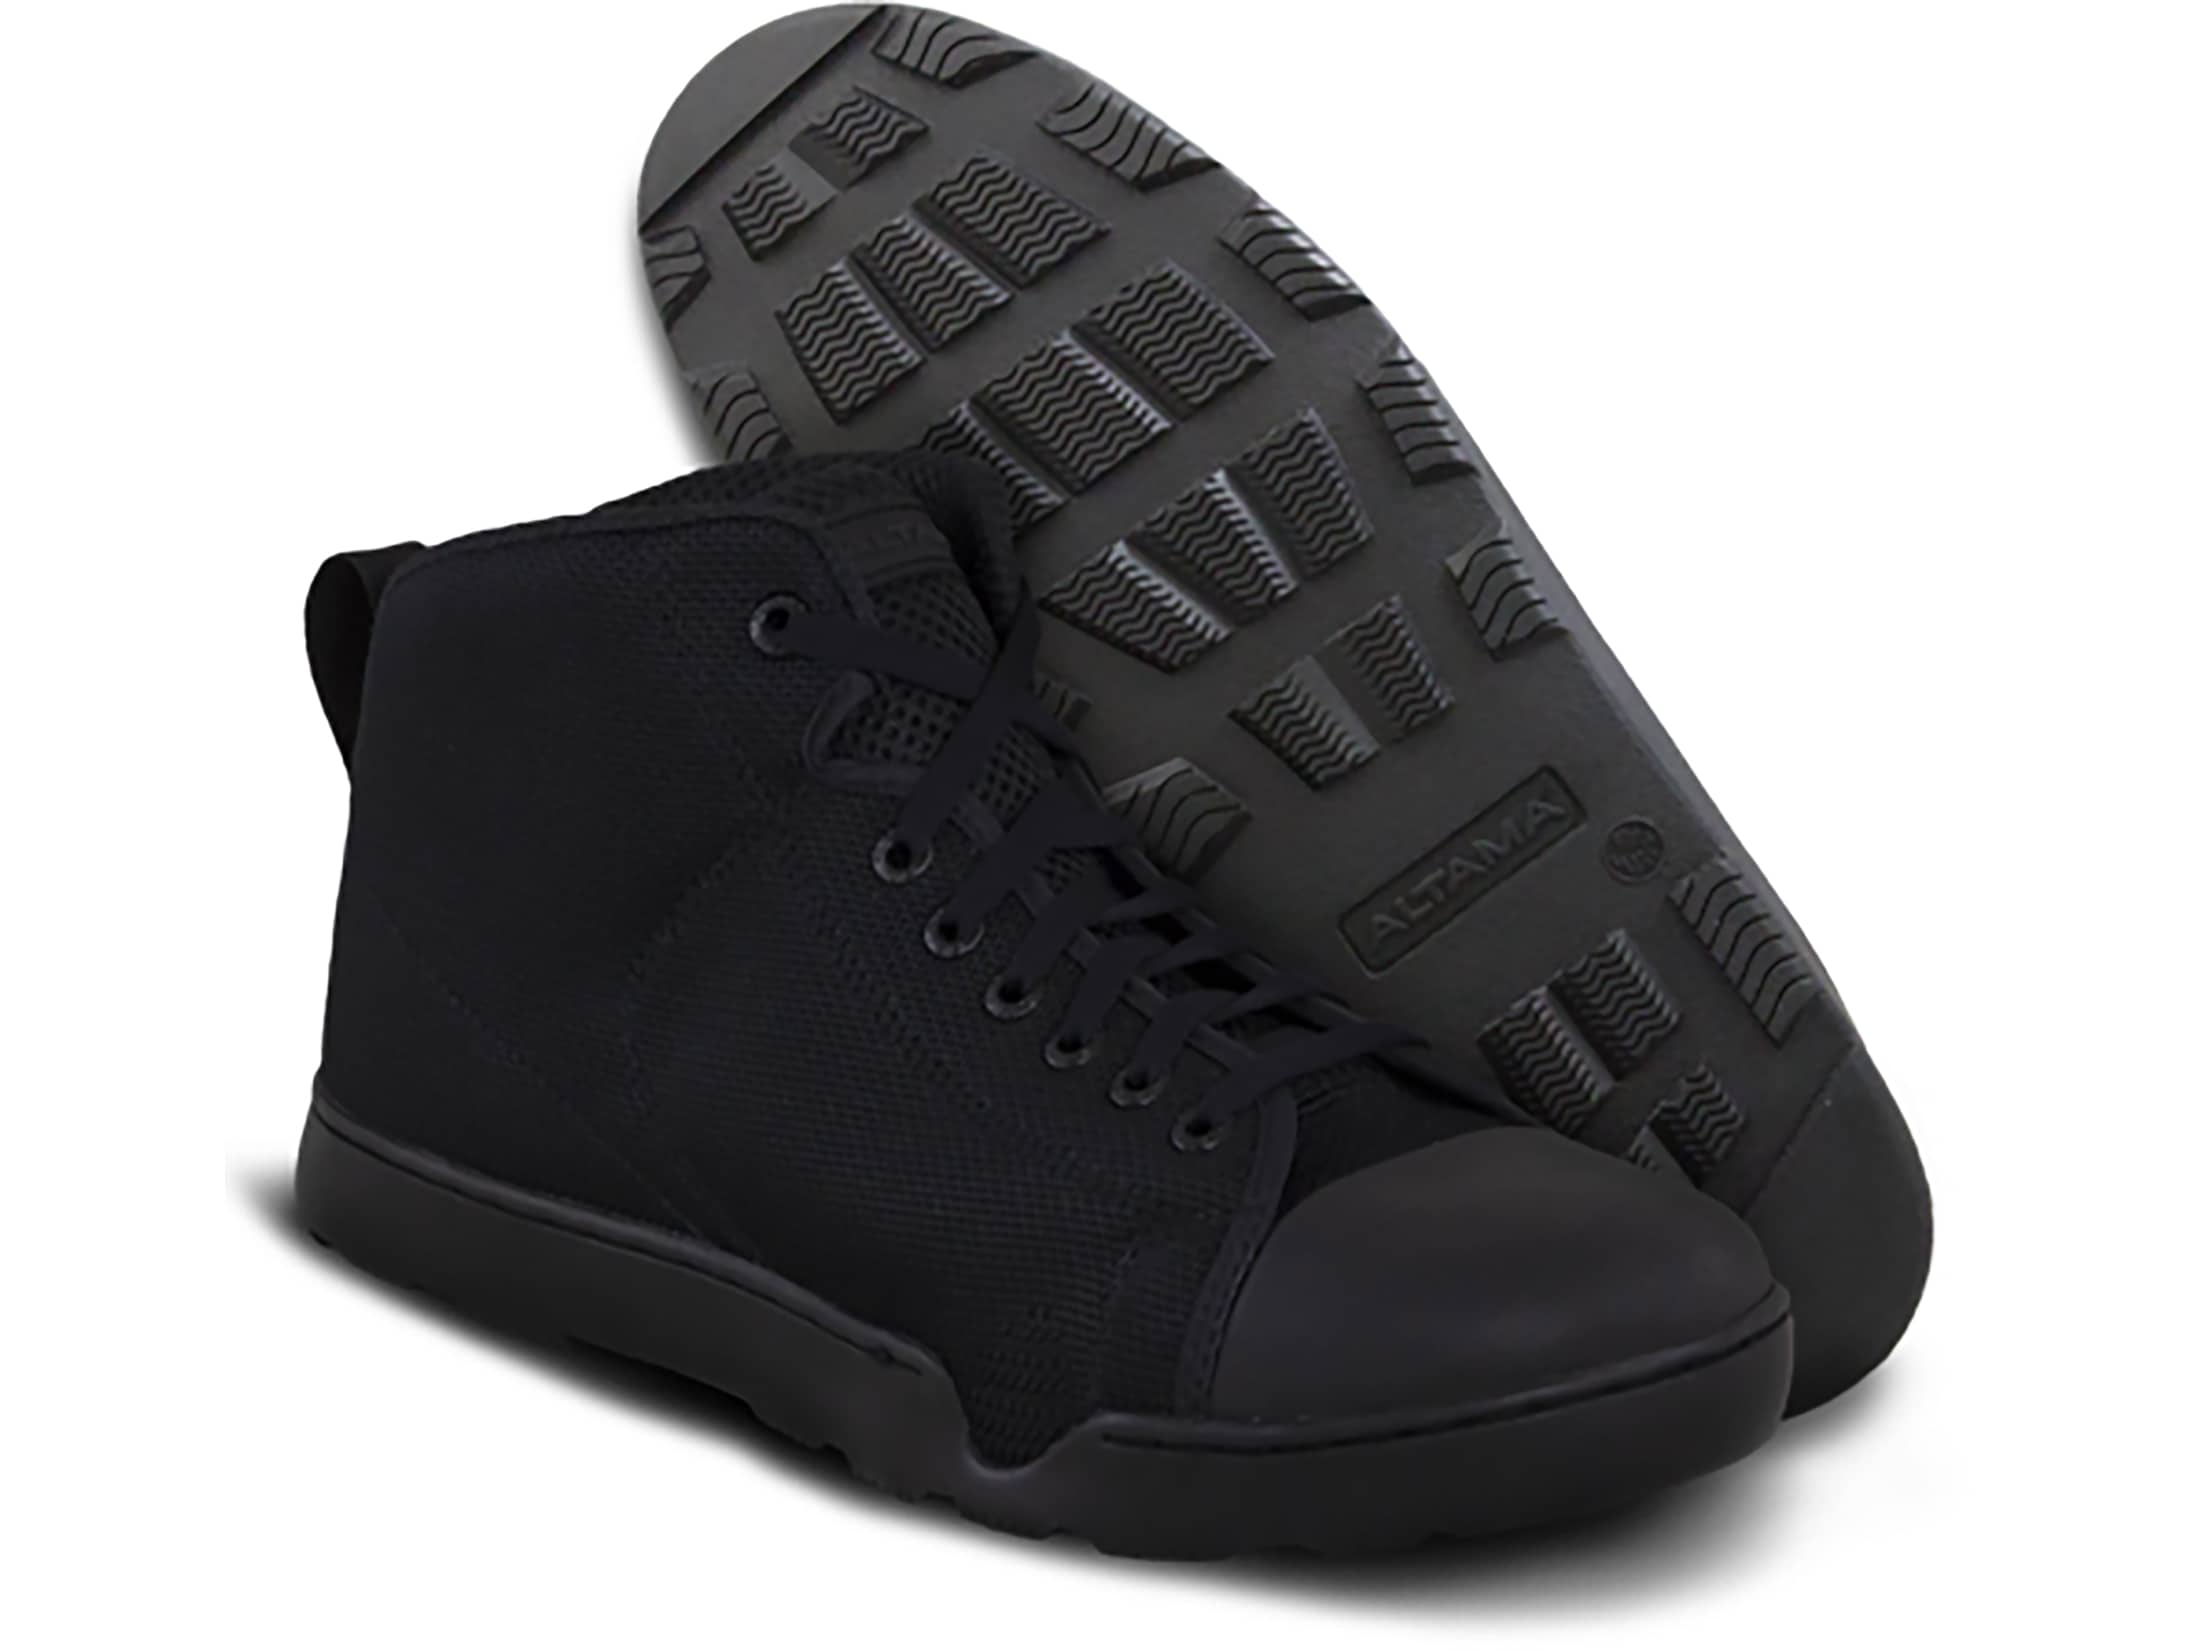 Altama Urban Assault Mid Tactical Shoes Nylon/Rubber Black Men's 8.5 D